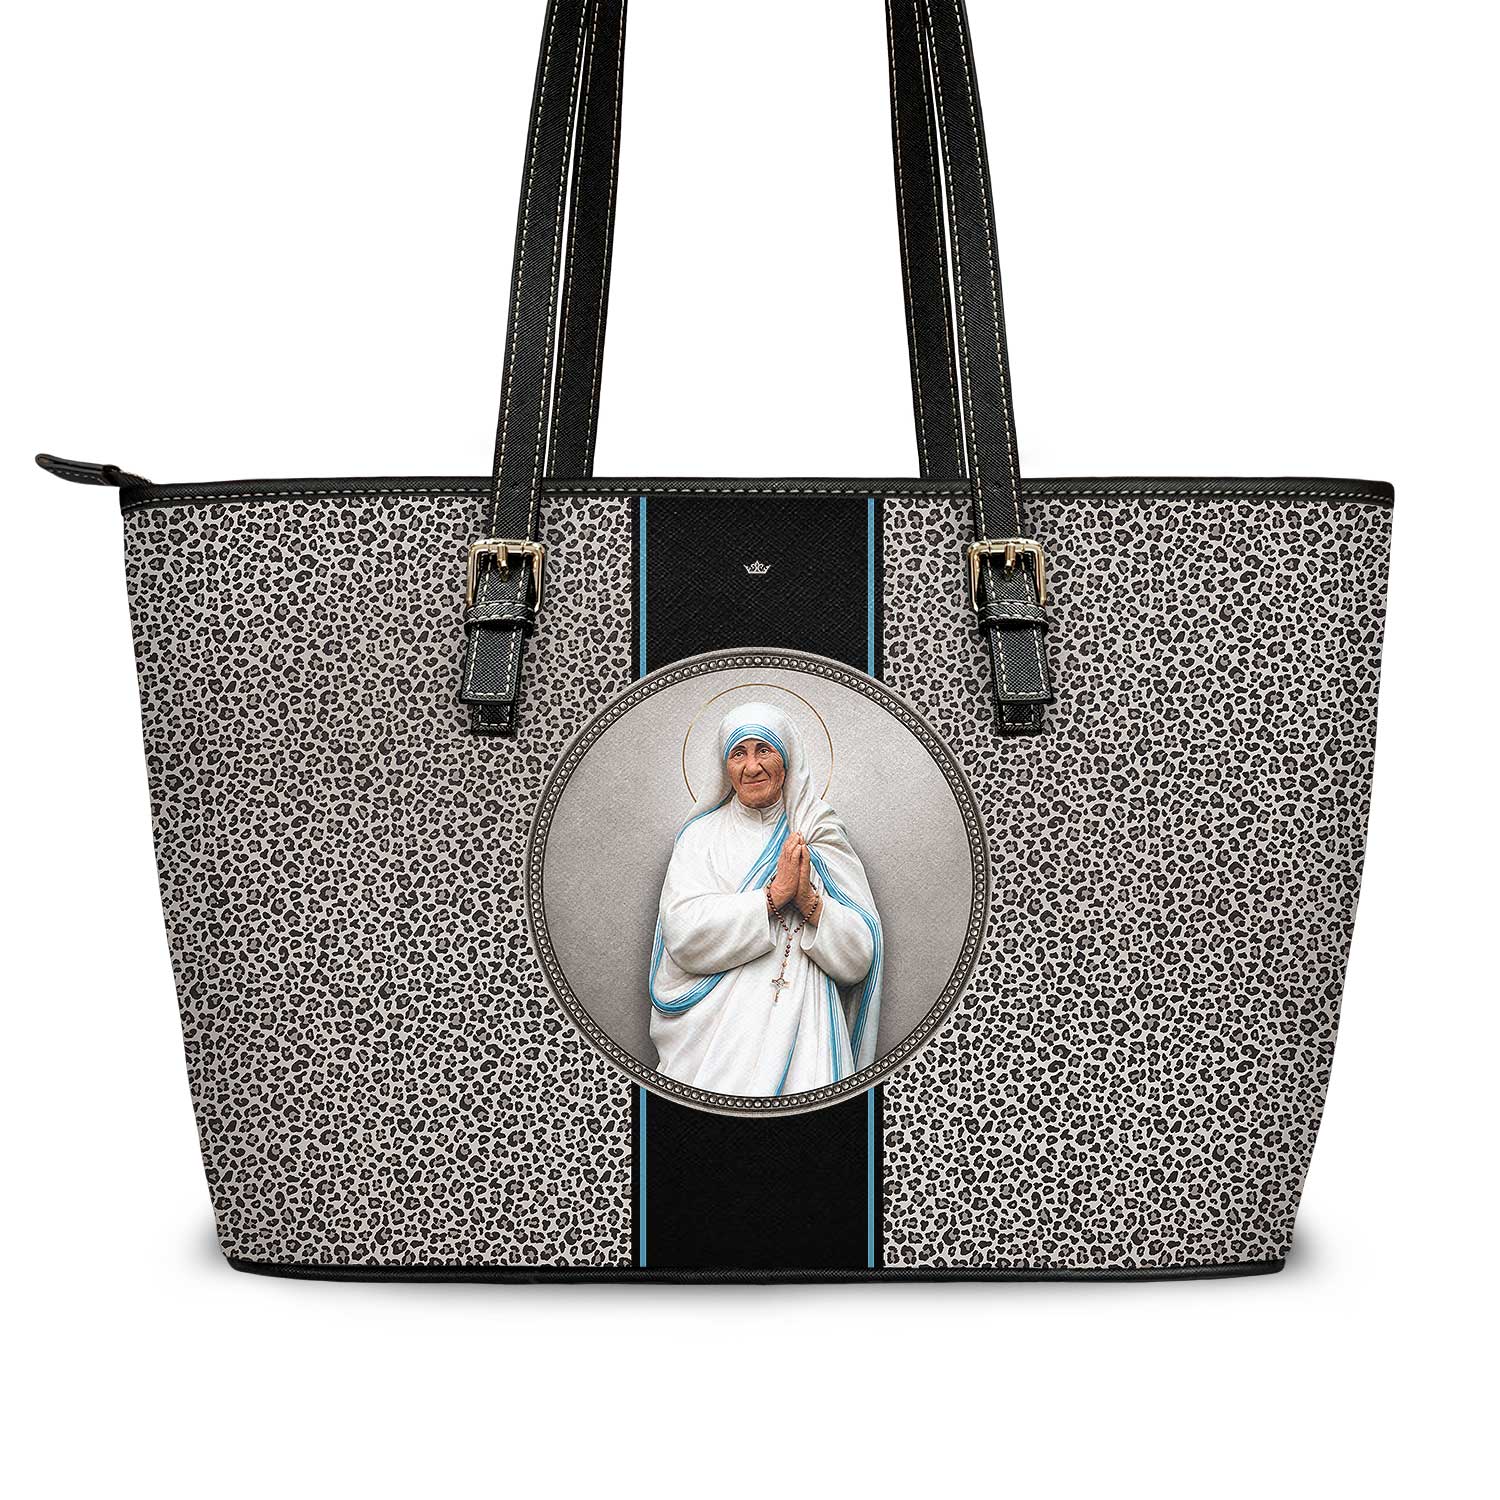 St. Mother Teresa Medallion Tote Bag (Leopard) - VENXARA®